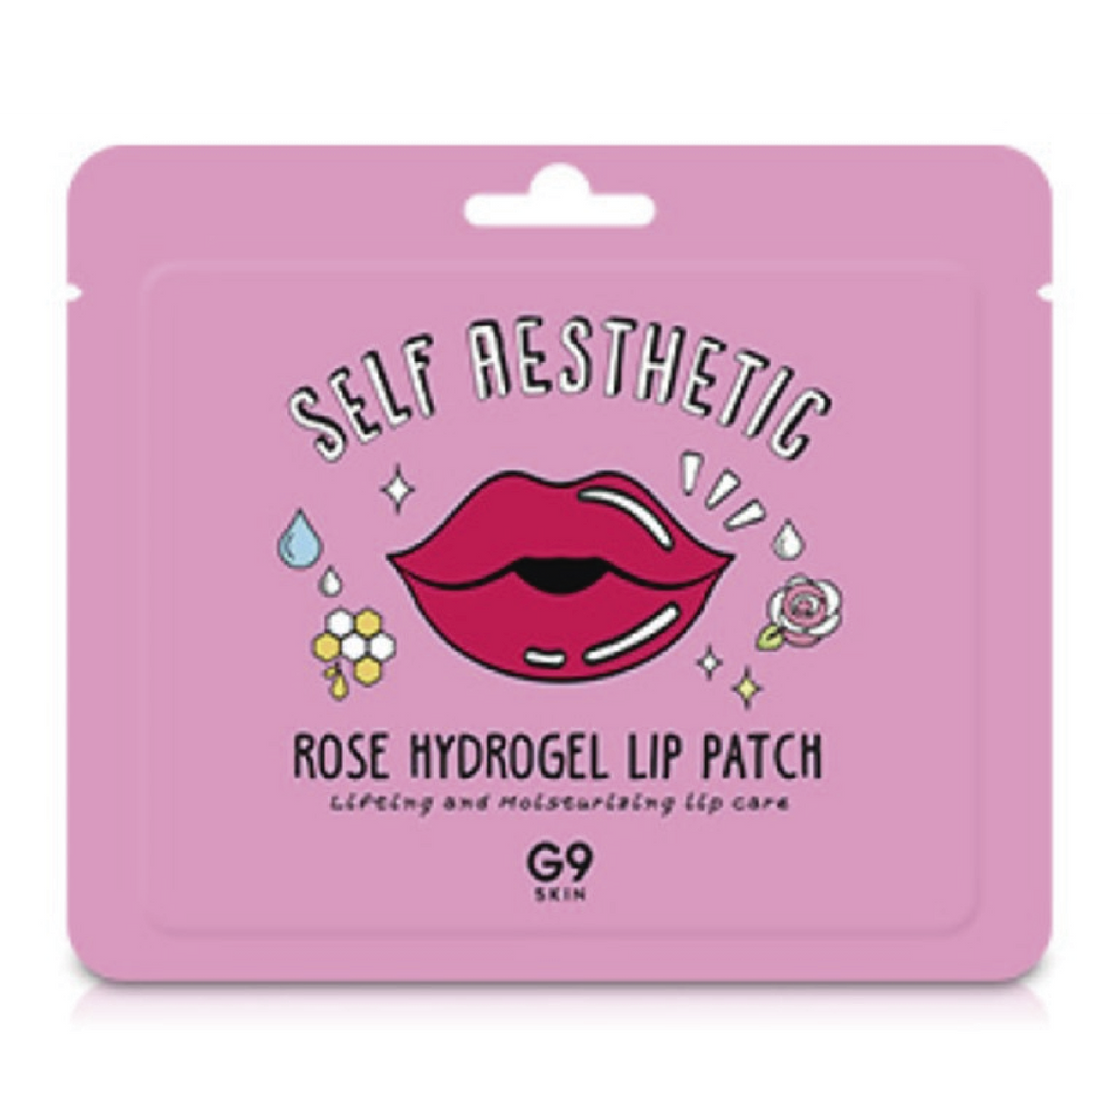 G9 Skin | Self Aesthetic Rose Hydrogel Lip Patch